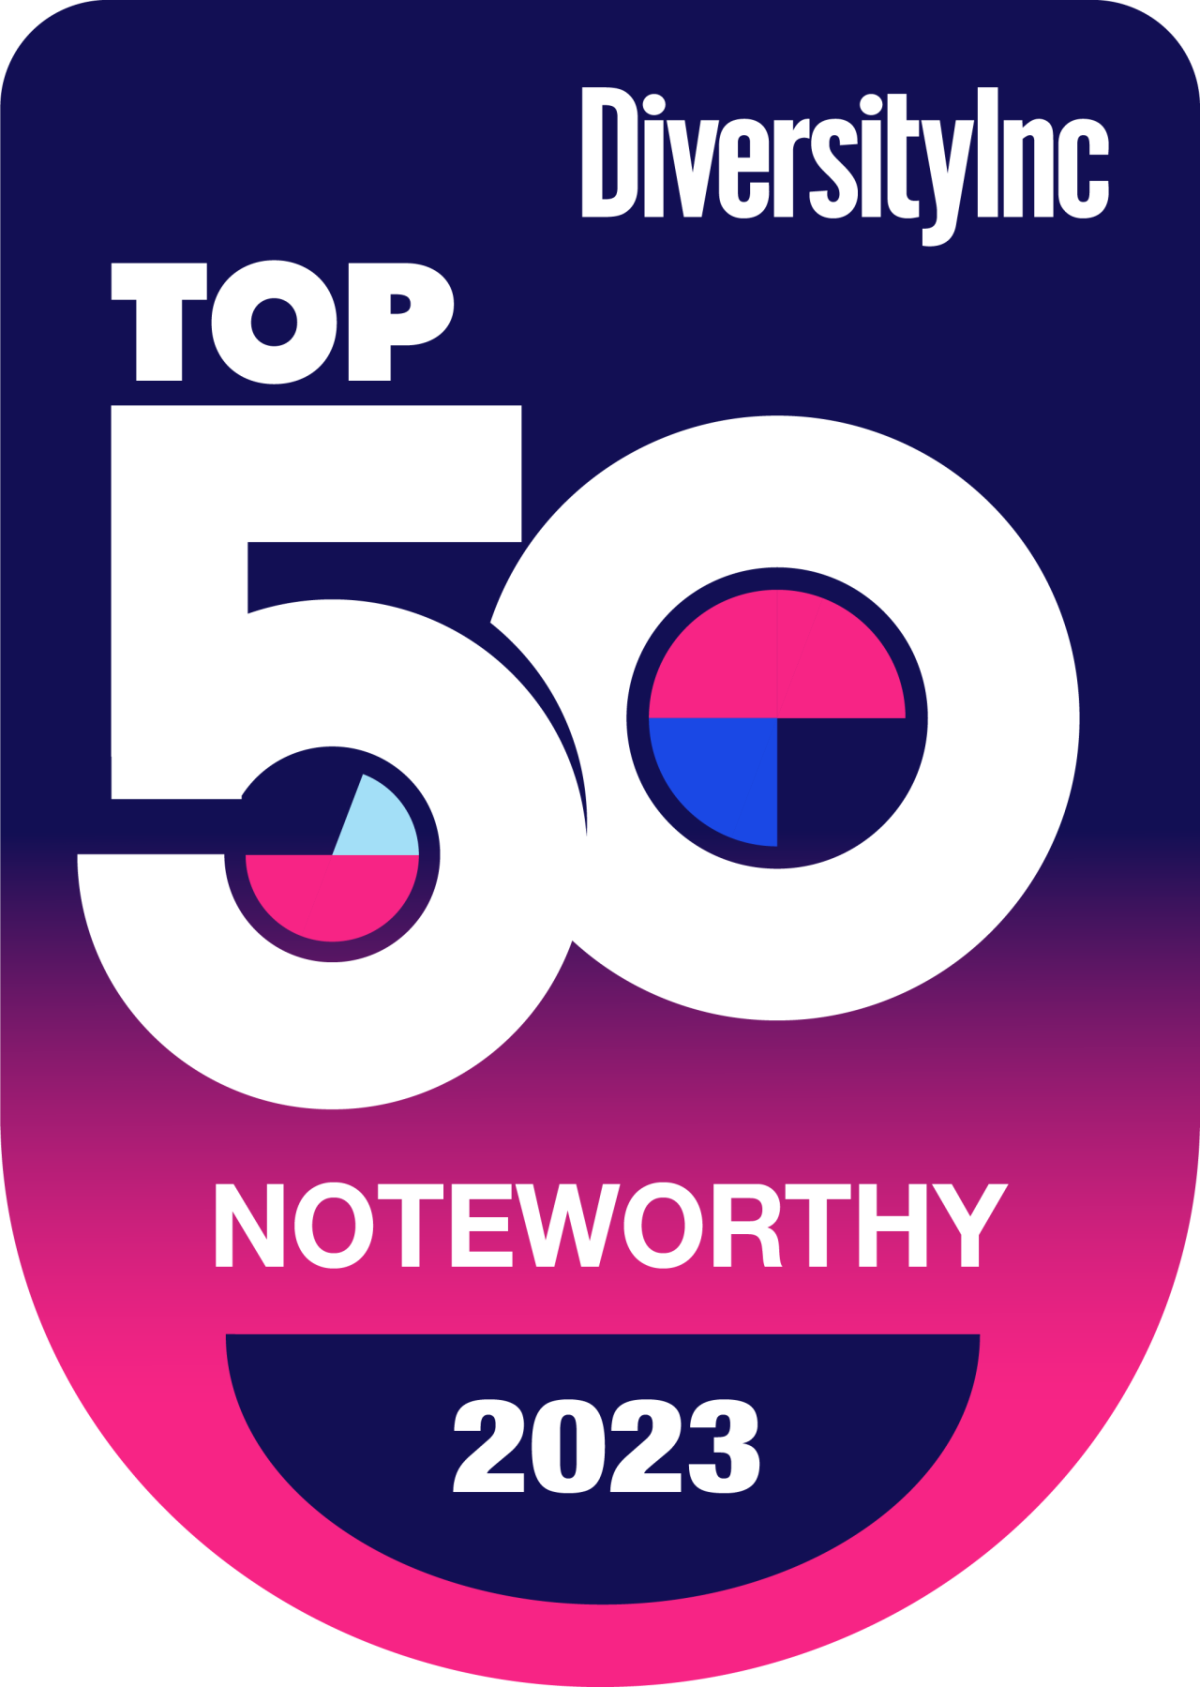 The DiversityInc Top 50 Noteworthy Companies 2023 badge is displayed. 